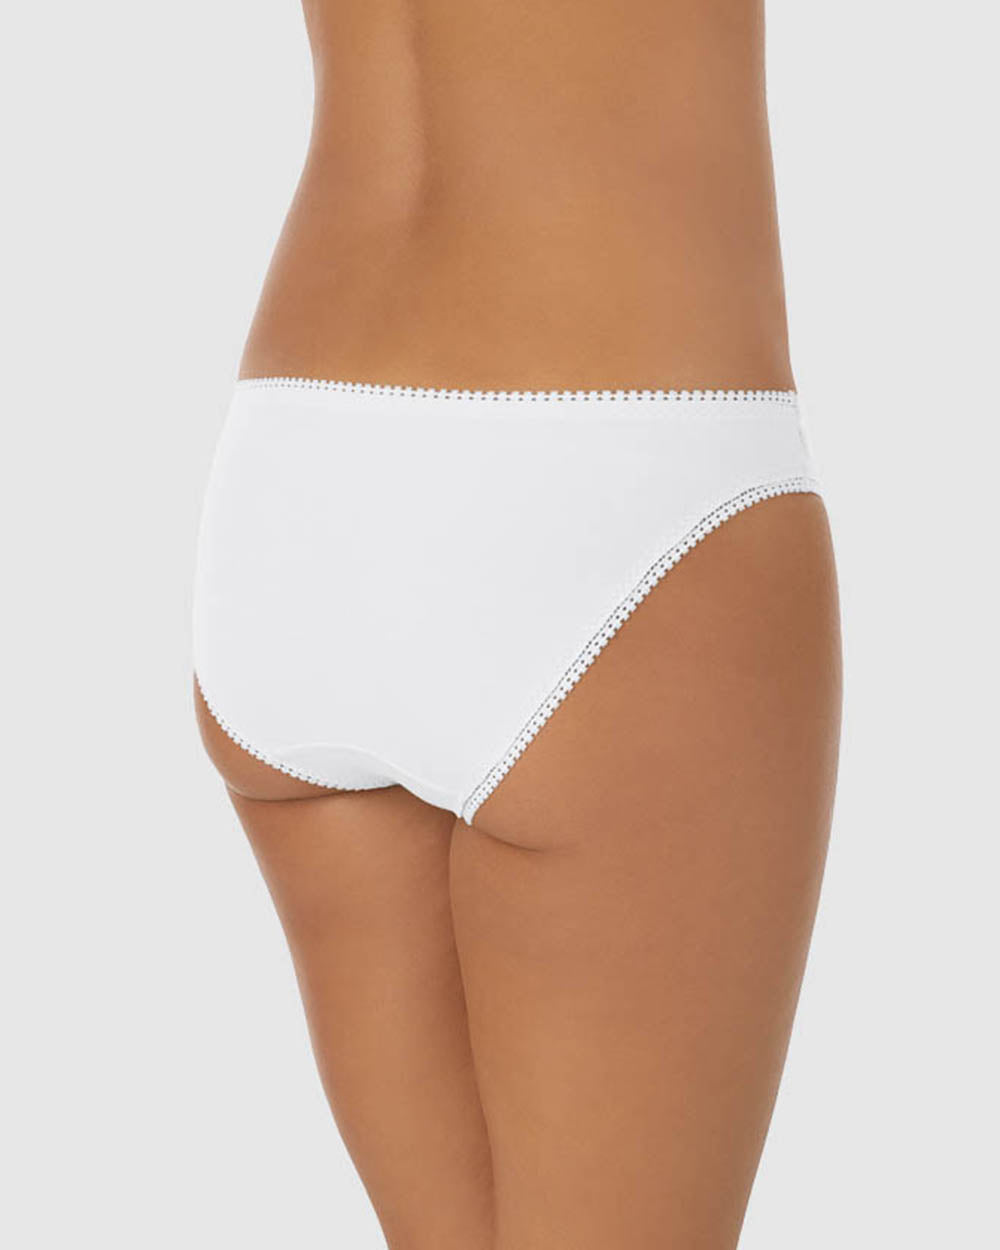 A lady wearing white Cabana Cotton Hip Bikini Underwear